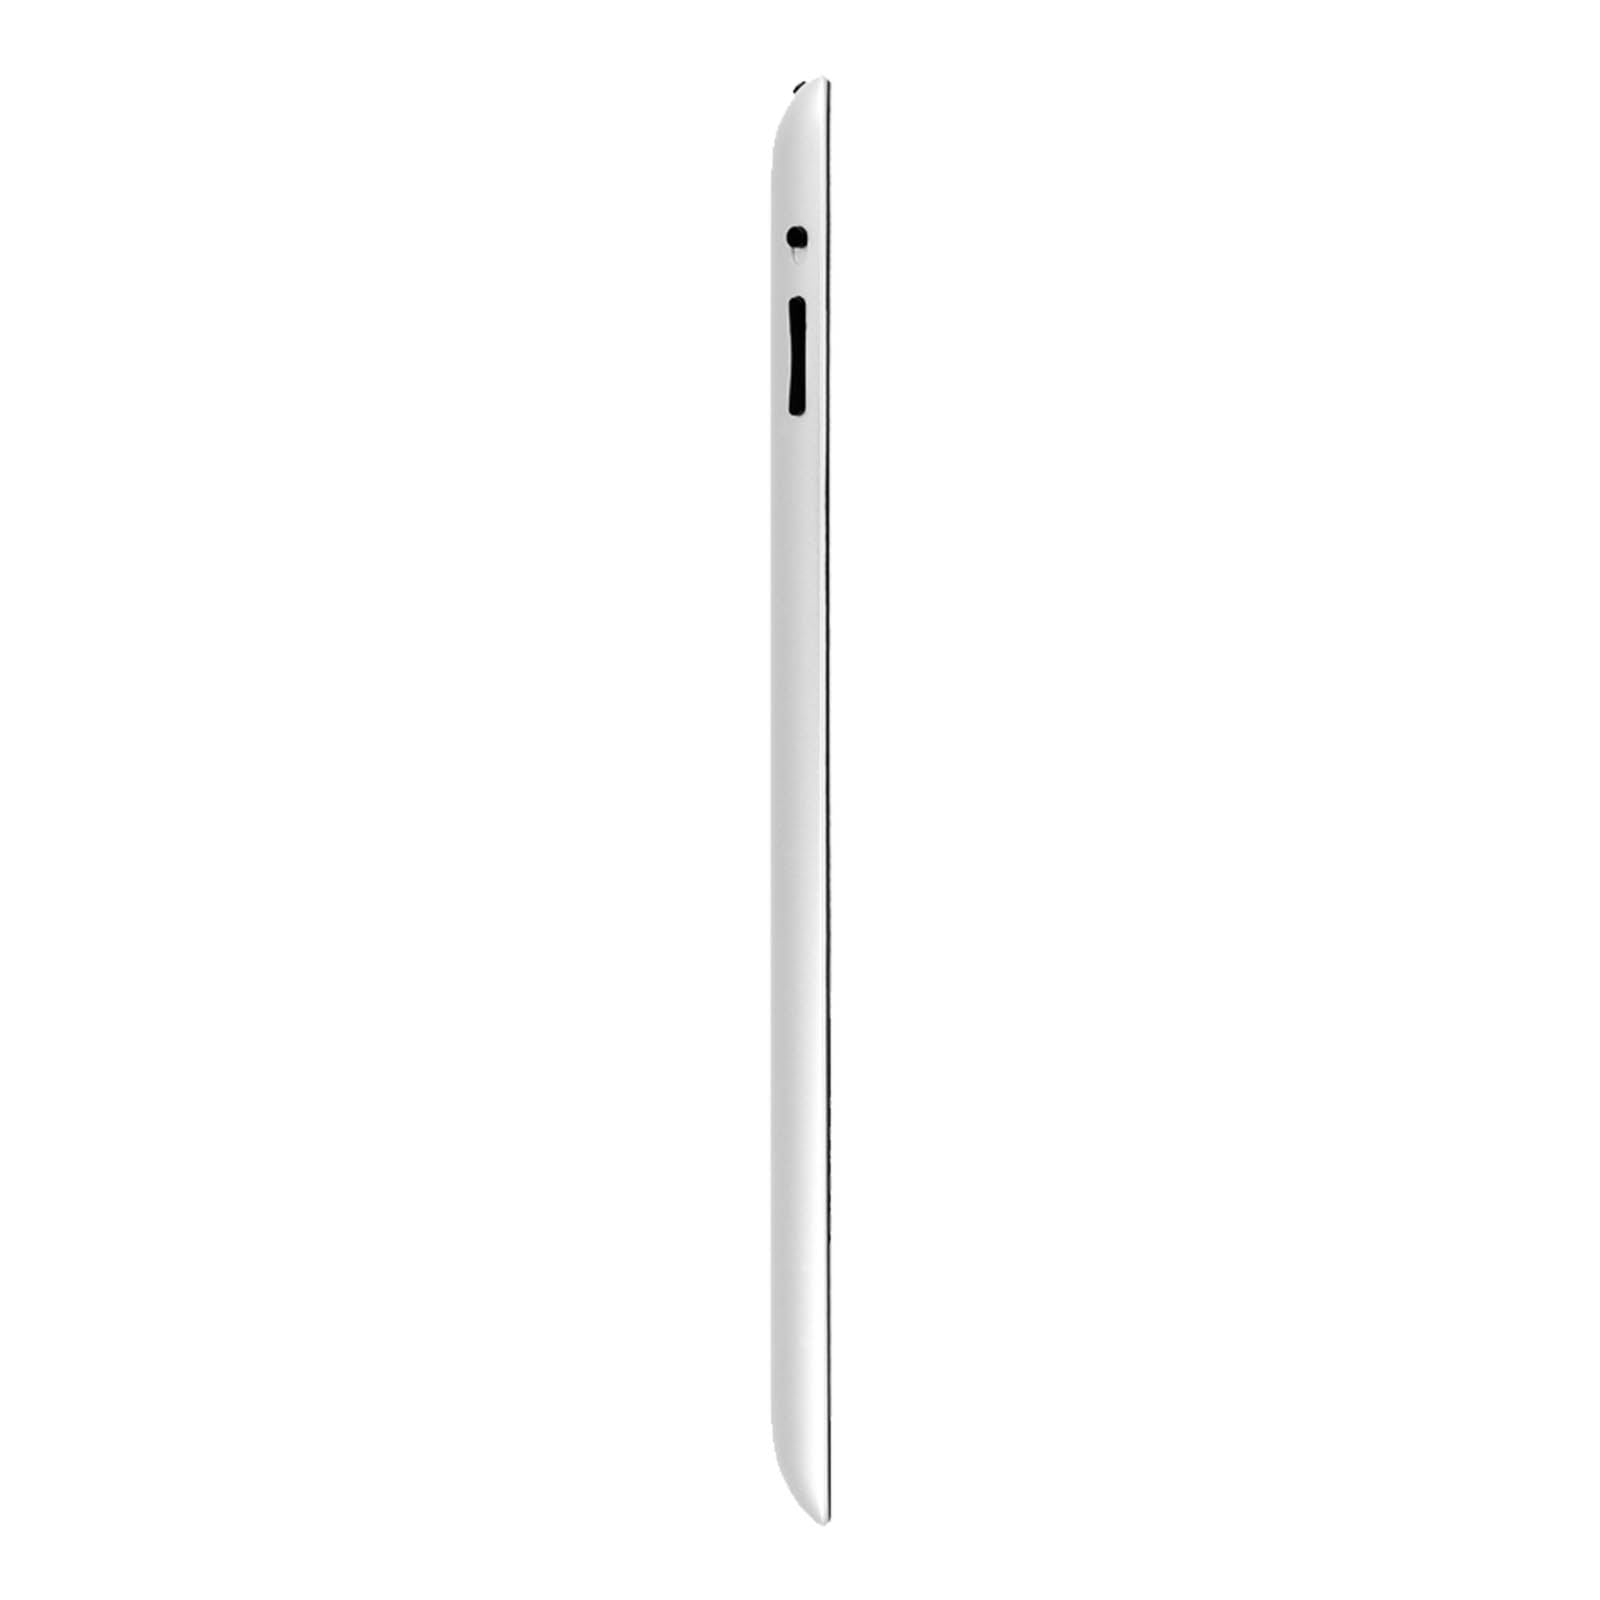 Apple iPad 4 32GB White - WiFi - Very Good